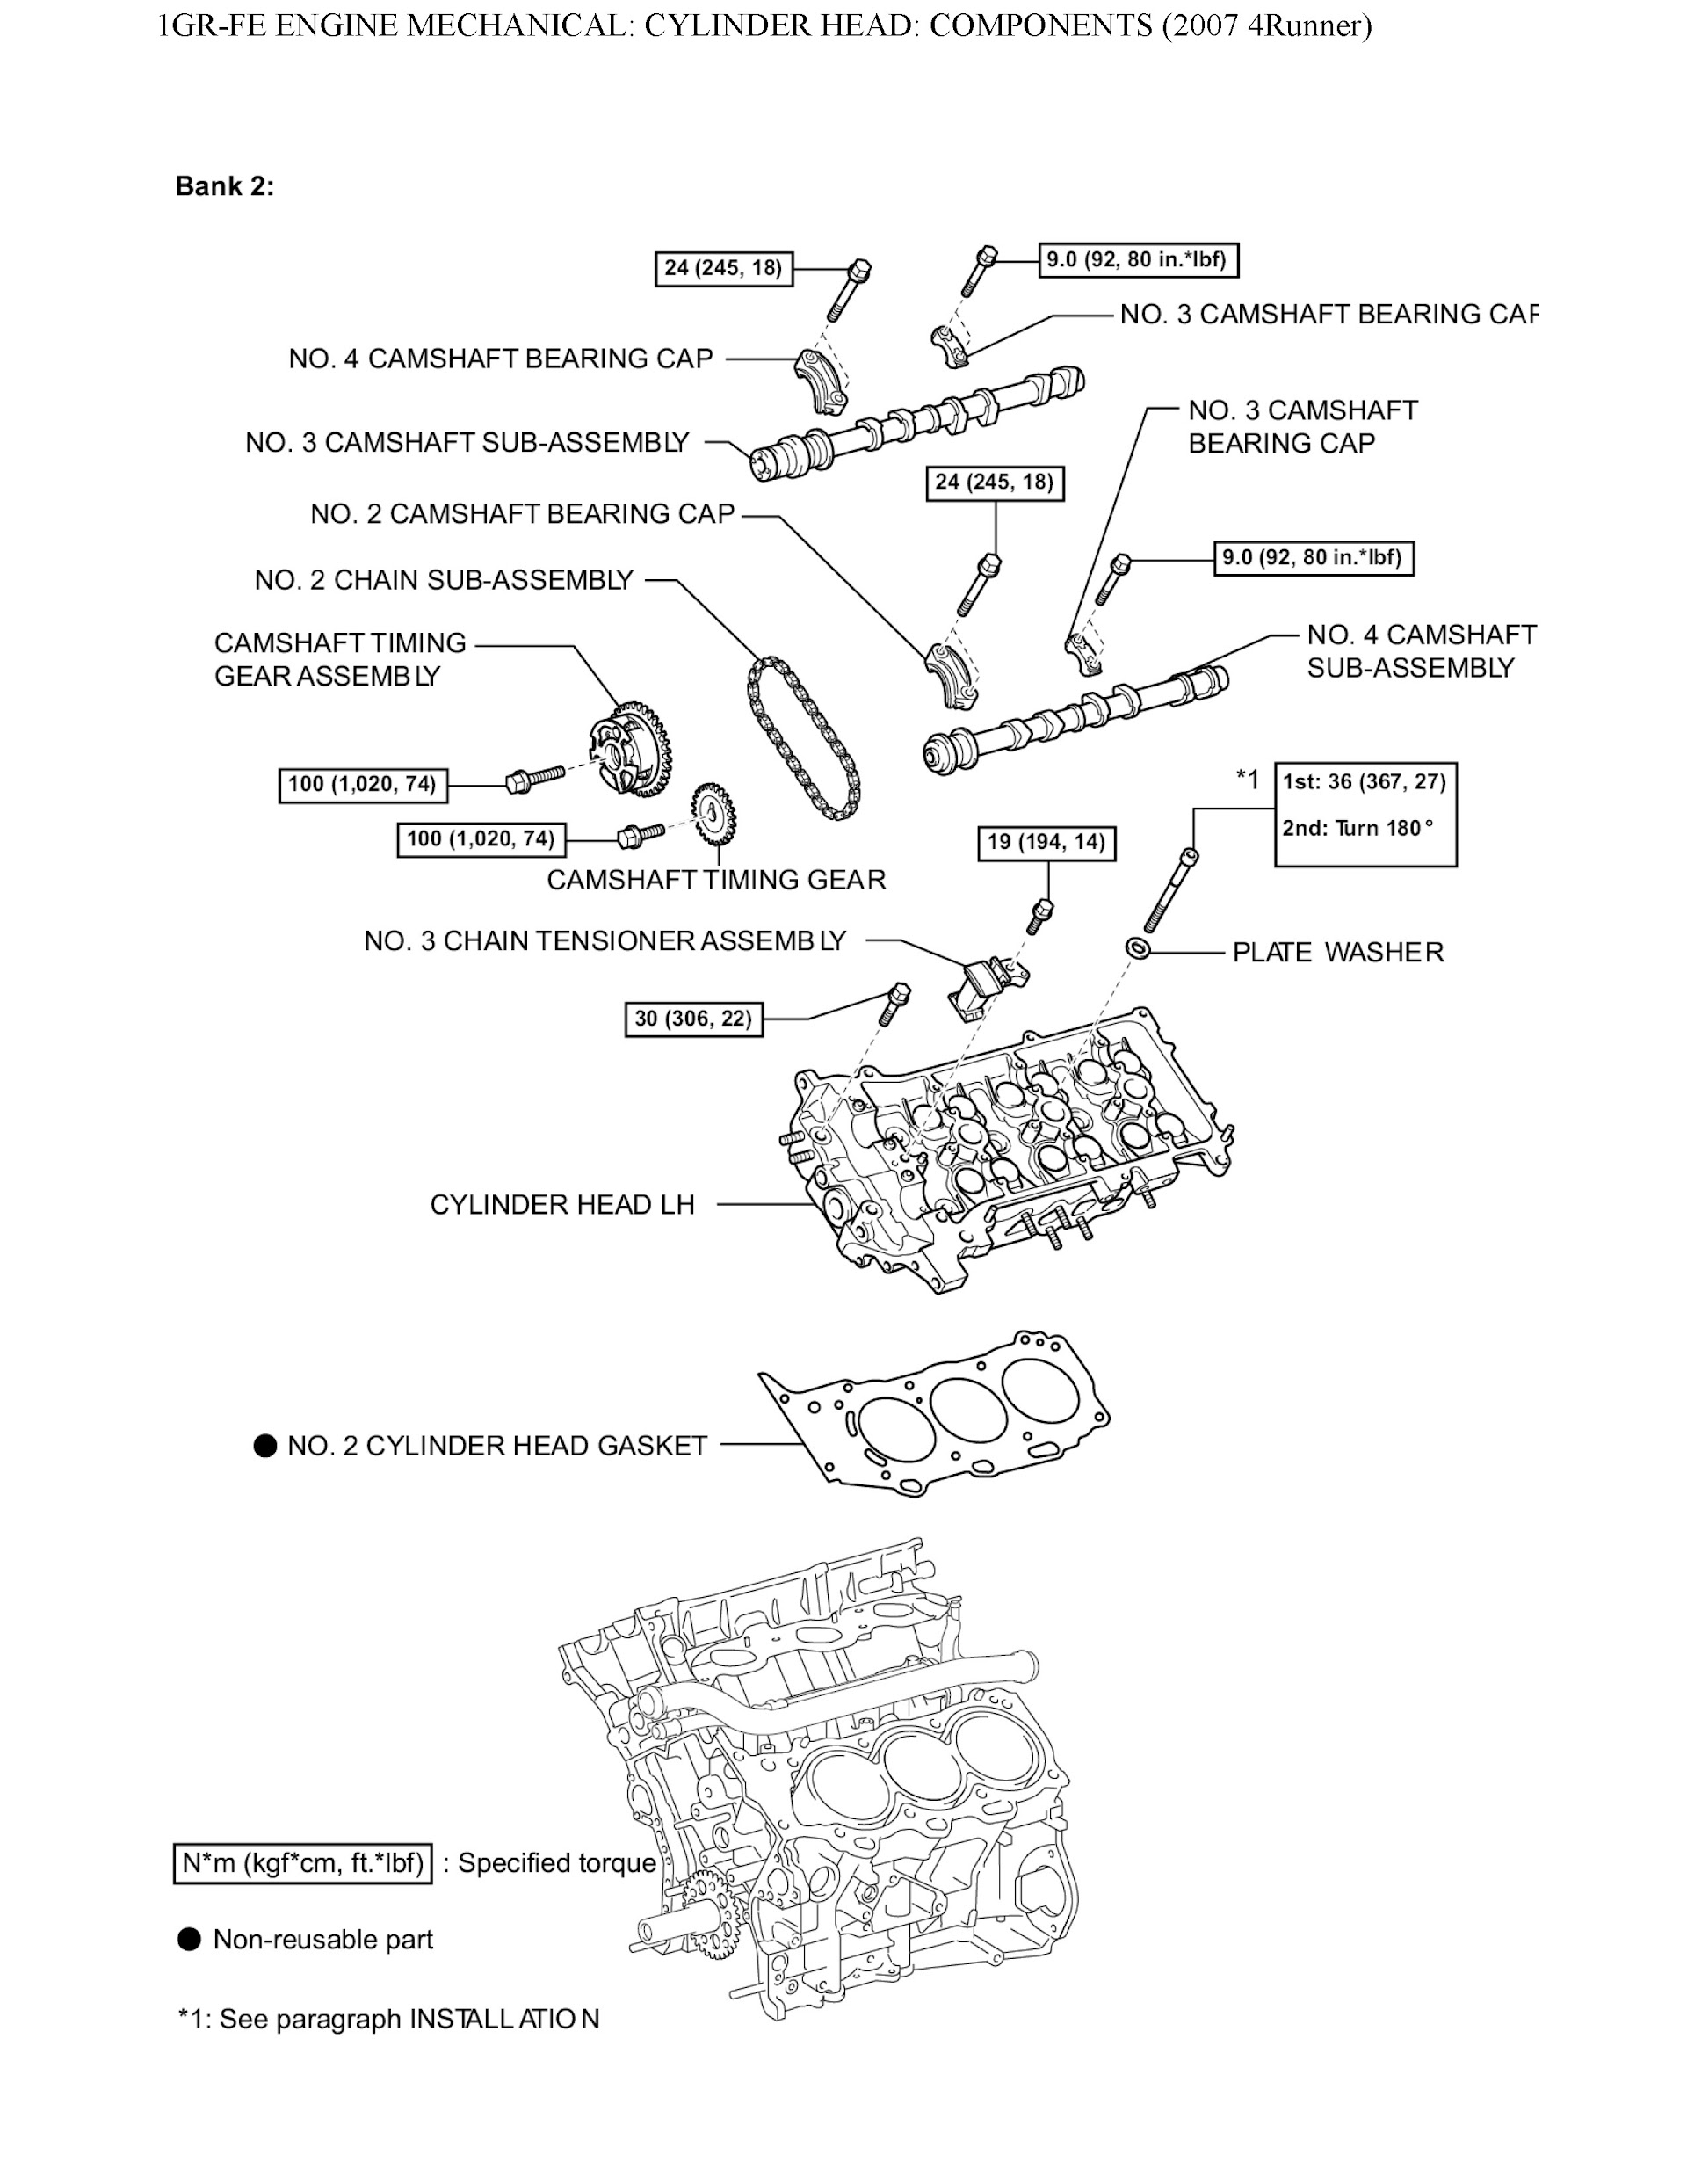 2007 Toyota 4Runner Repair Manual, 1GR-FE Engine Mechanical, Cylinder Head